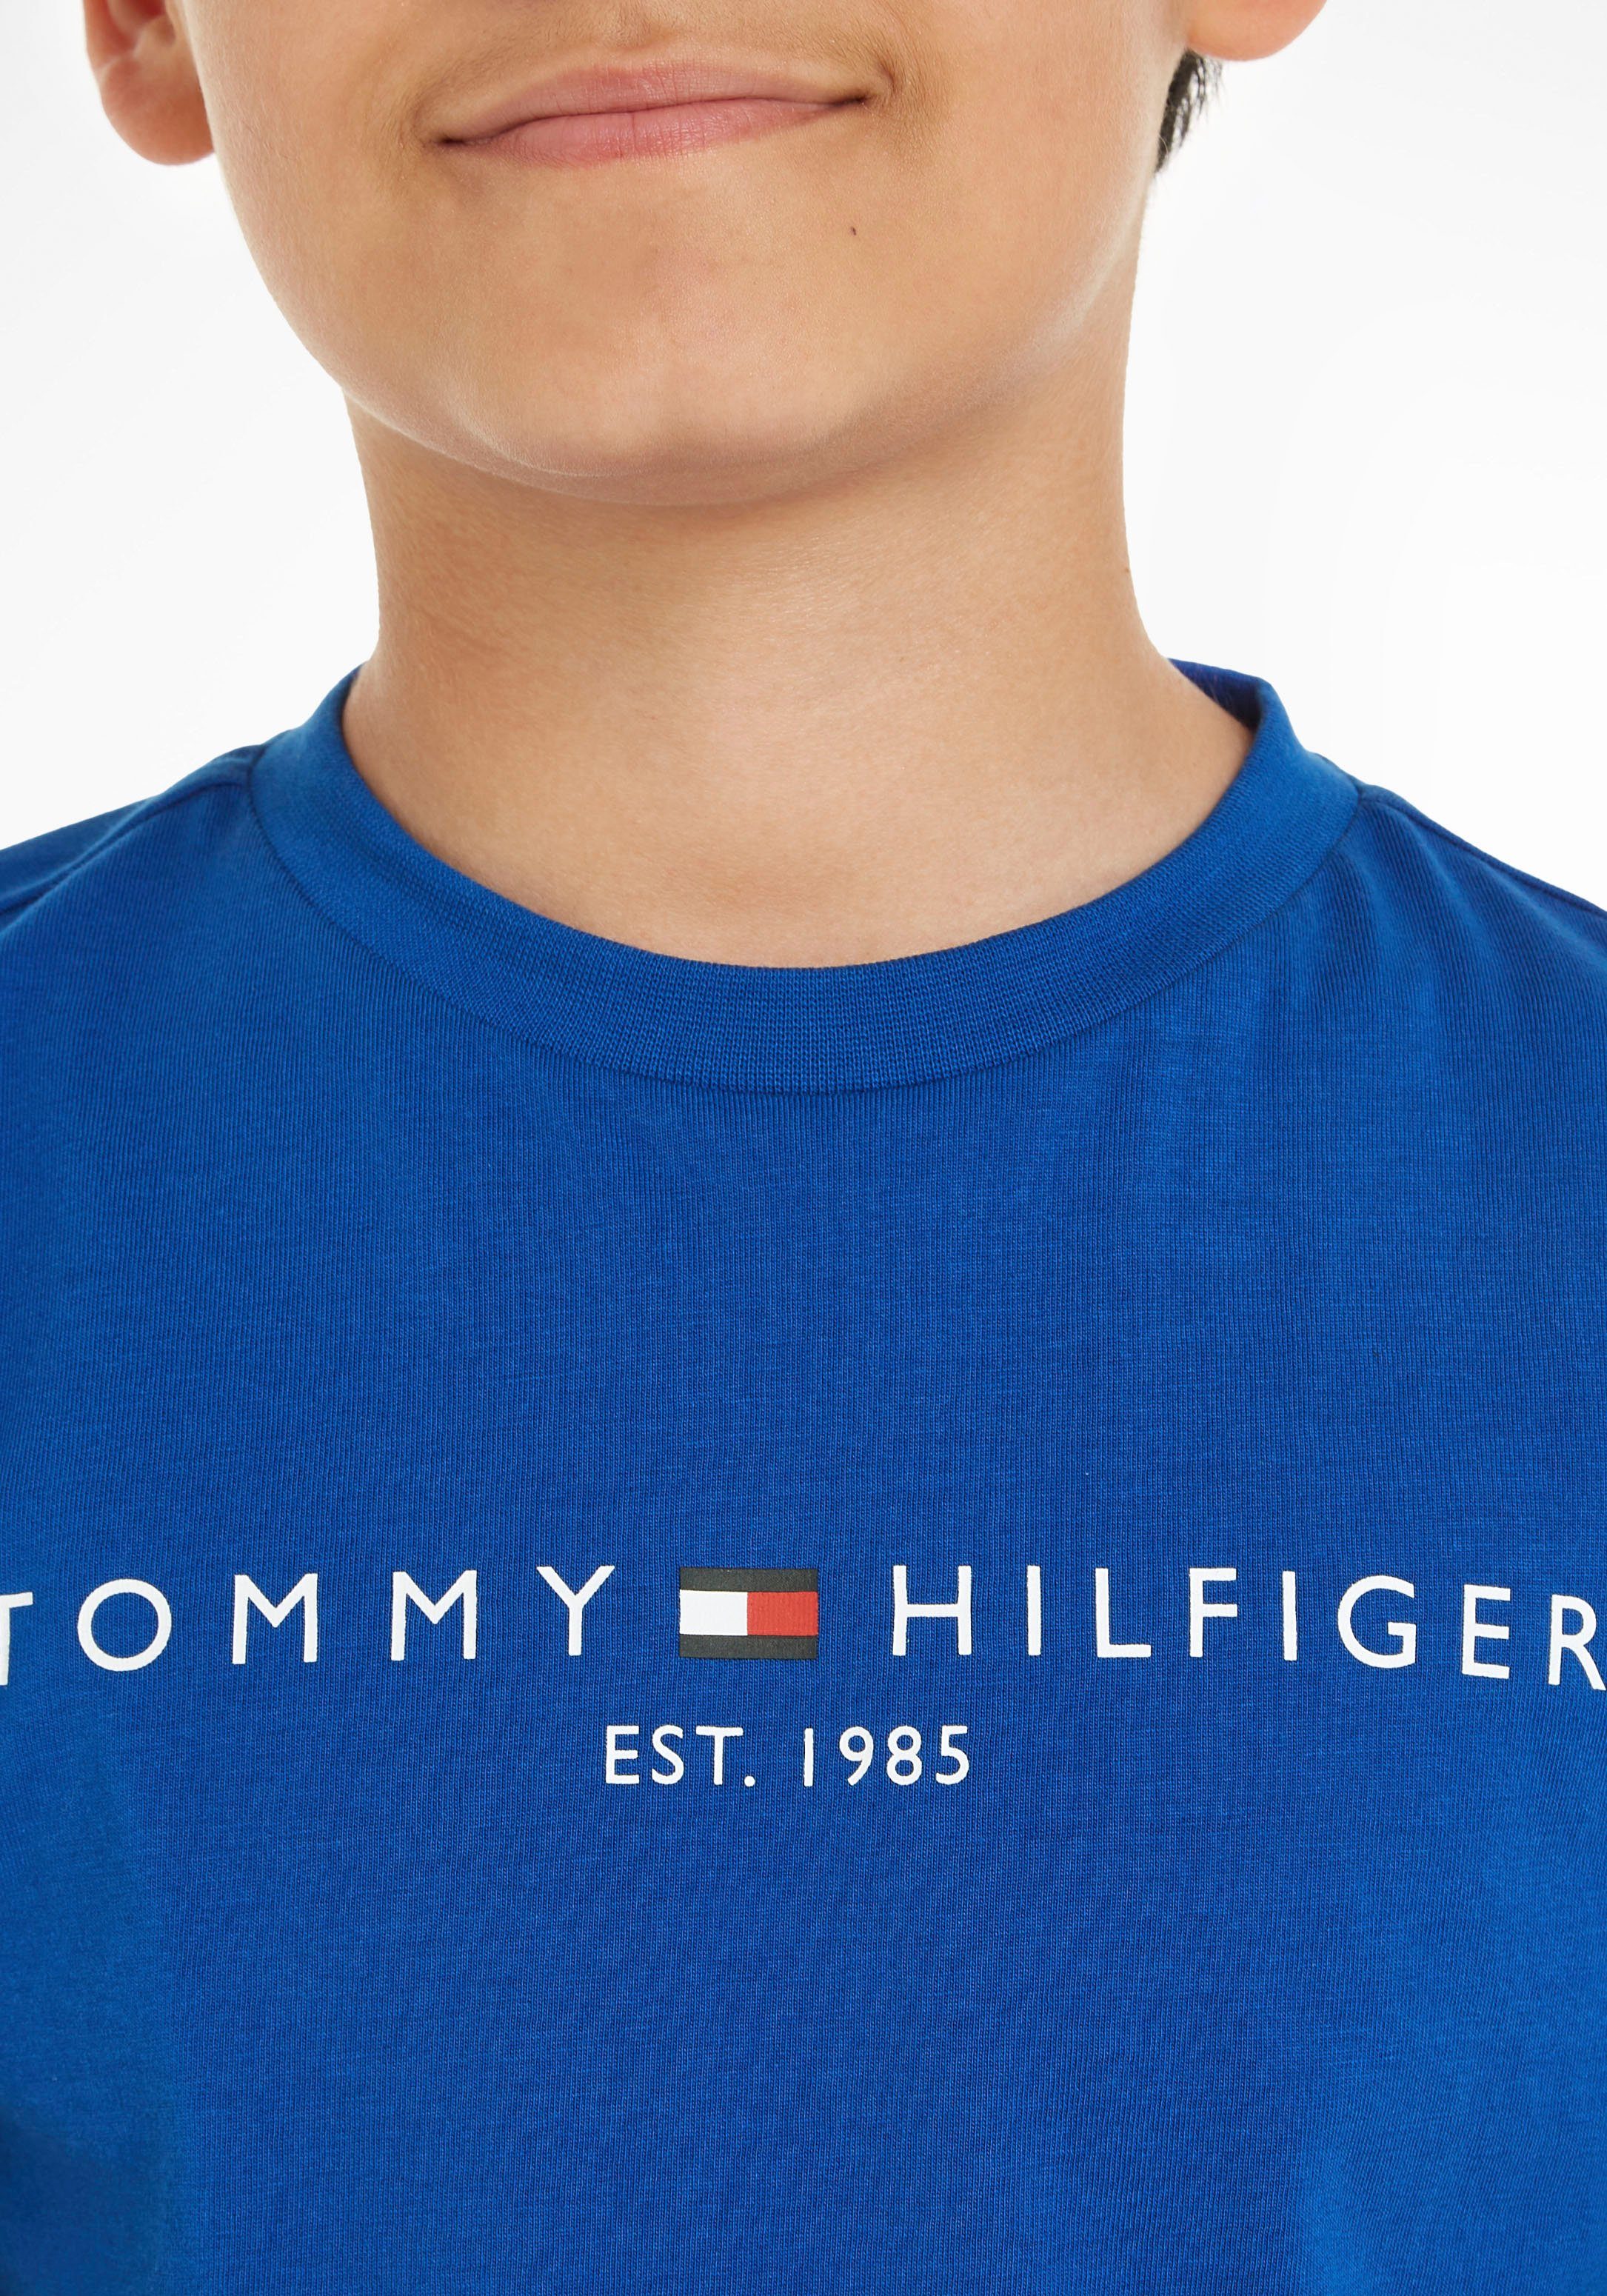 Tommy Hilfiger T-Shirt blue ESSENTIAL Jahre U S/S TEE ultra Kinder bis 16